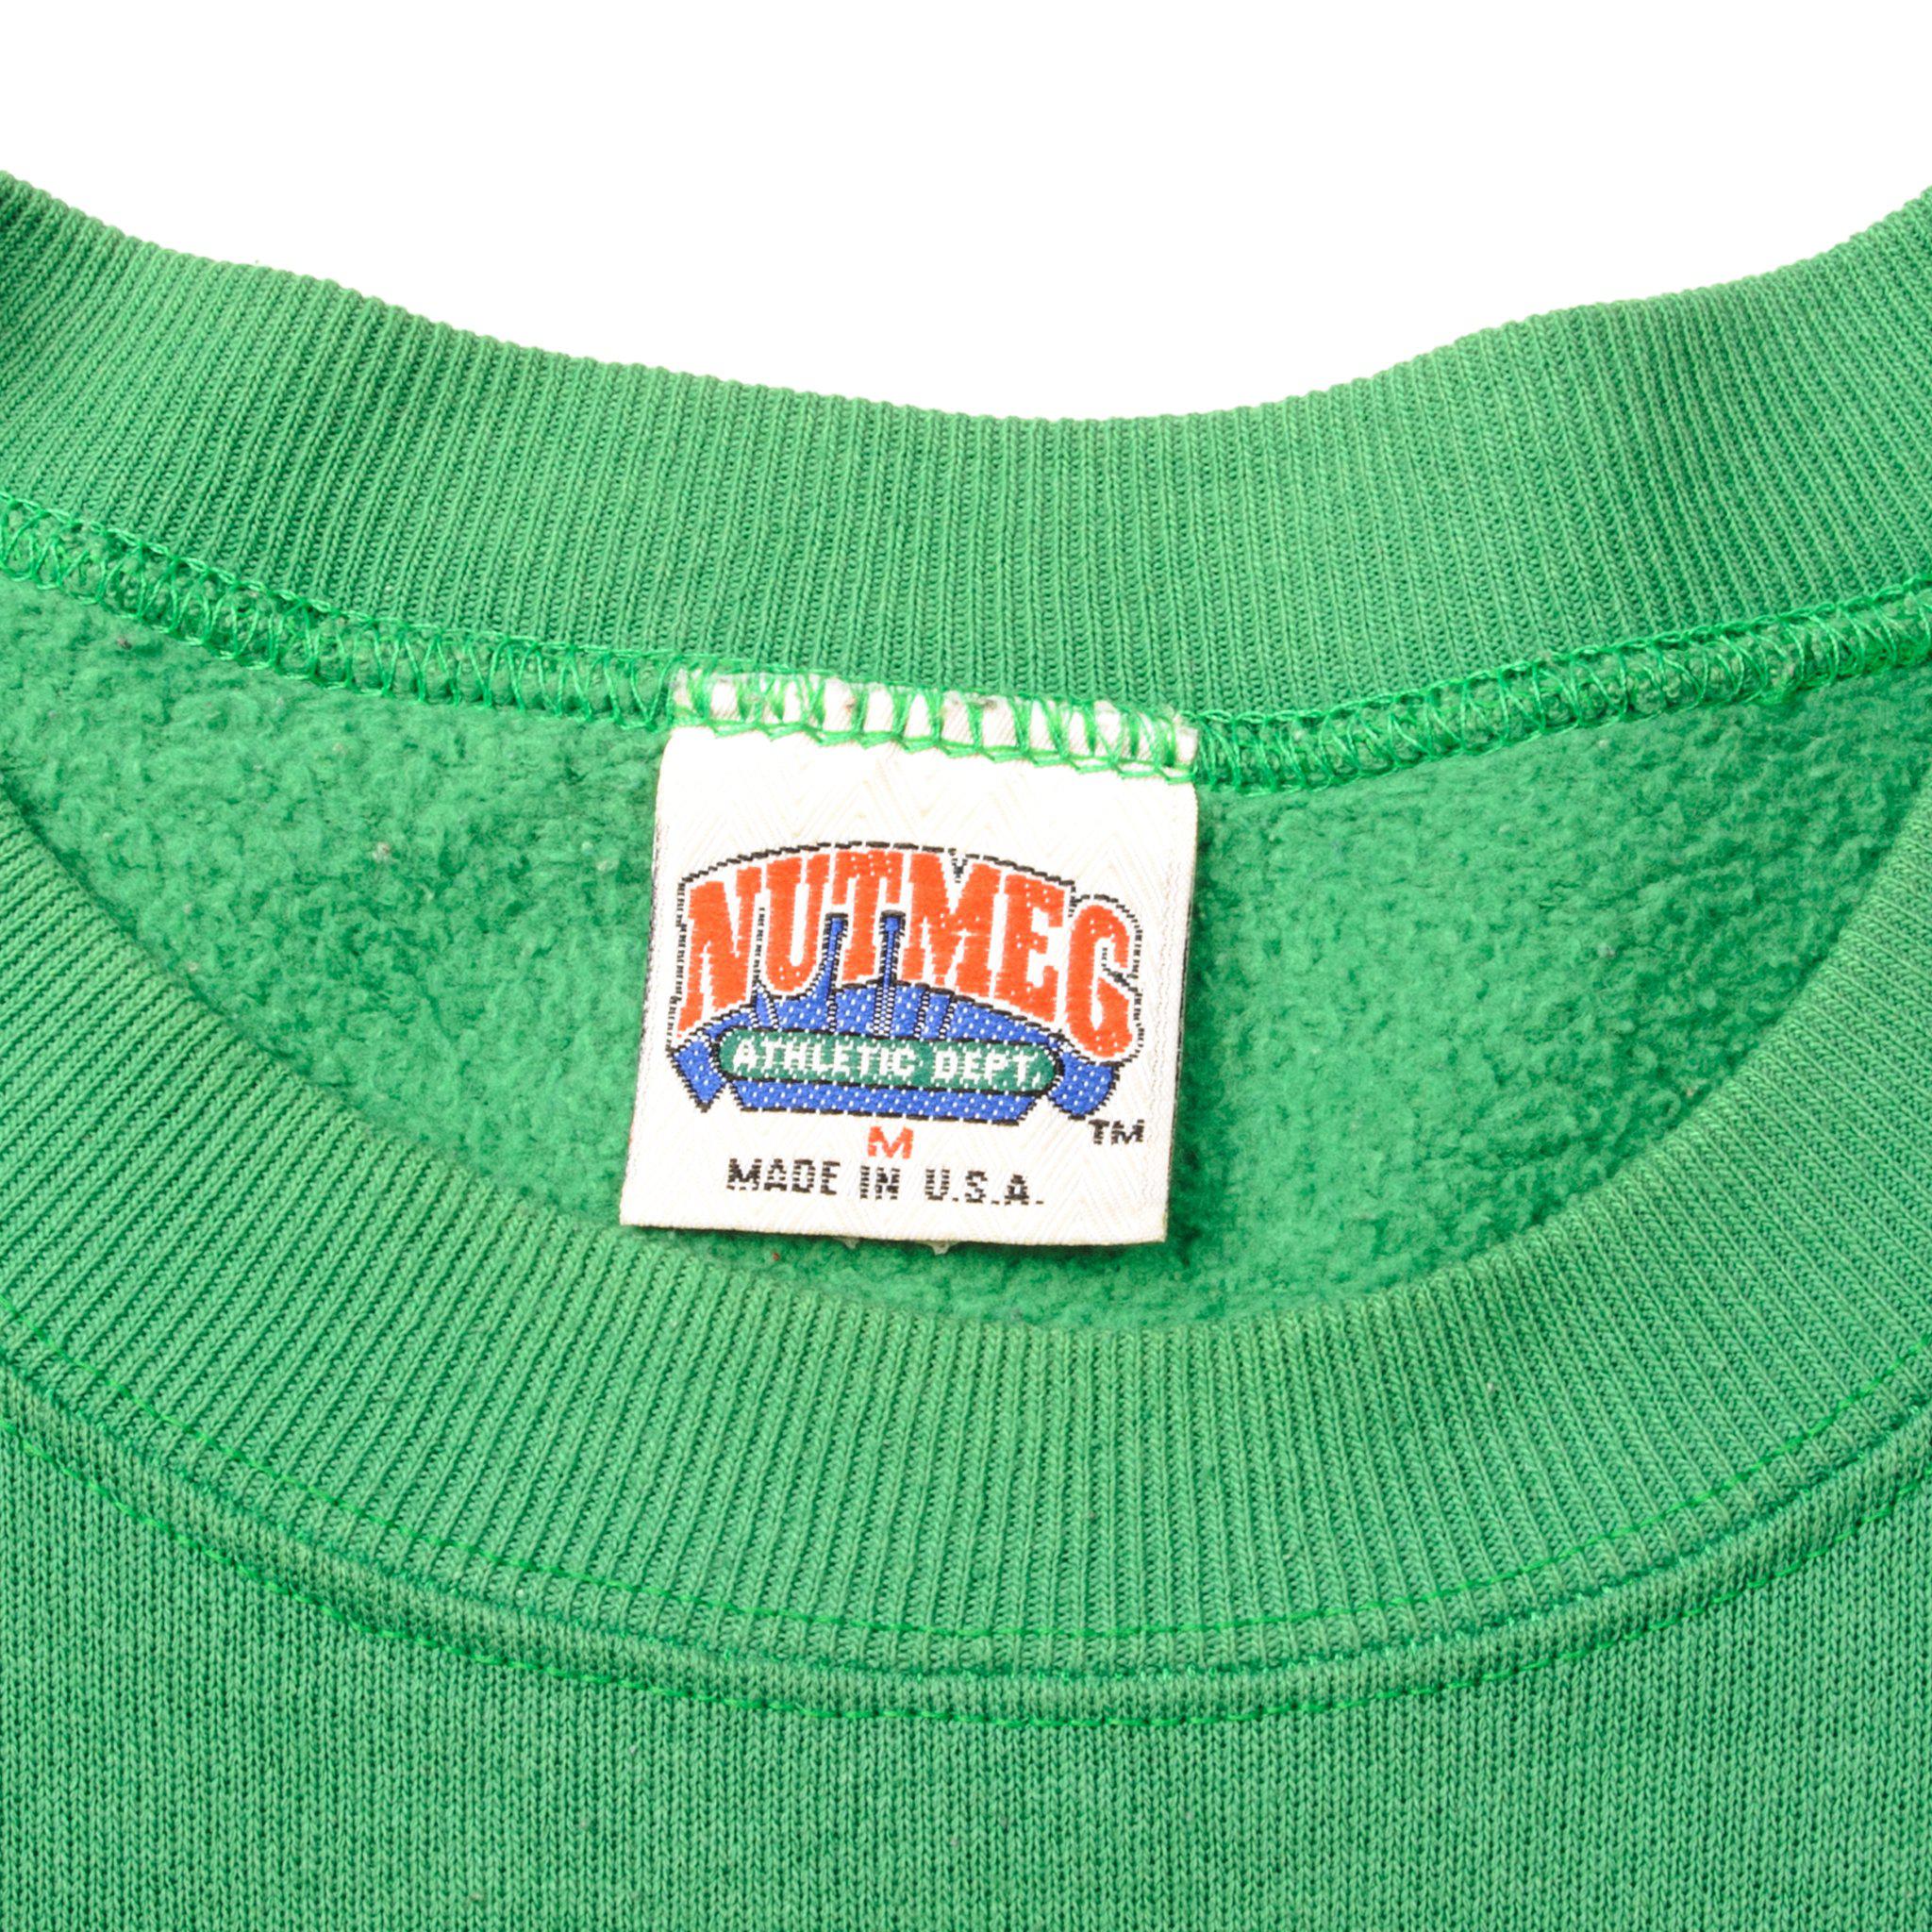 NBA Basketball EST 1946 Vintage Boston Celtics Sweatshirt, Cheap Boston  Celtics Merchandise - Allsoymade